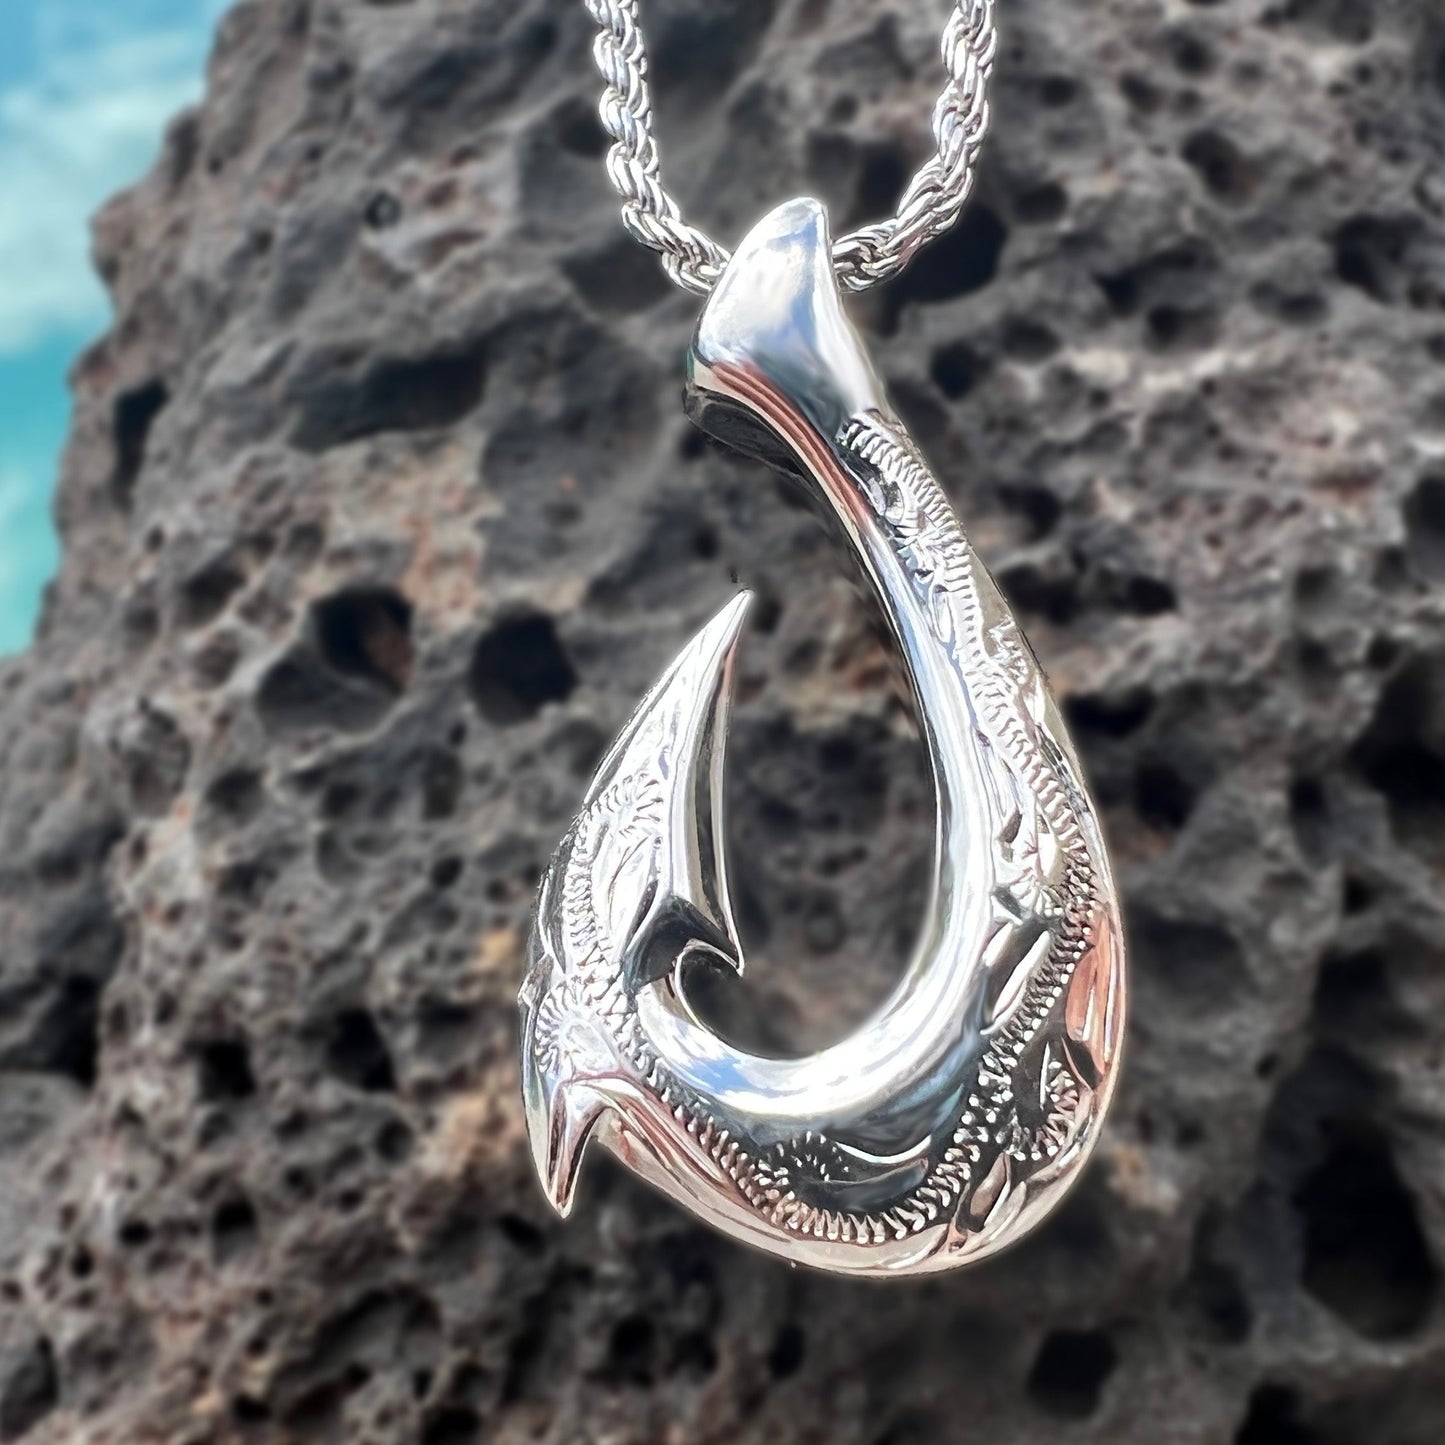 Fisherman Hook Necklace - Vanda Jewelry Charm+18 inch Women Chain